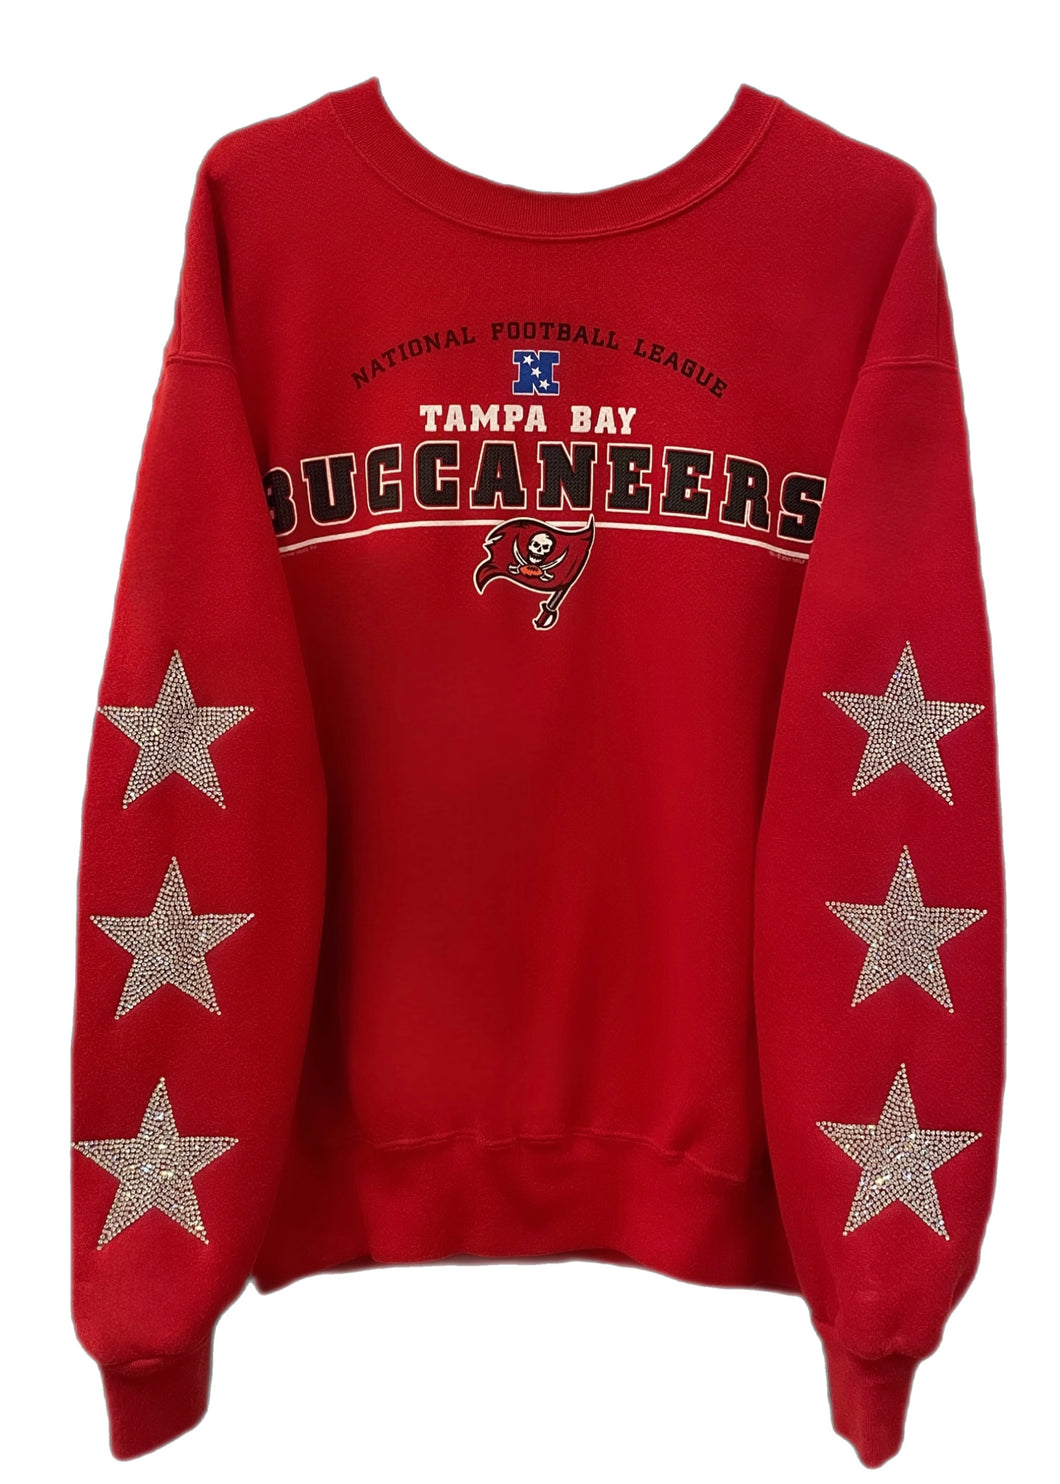 Tampa Bay Buccaneers, NFL One of a KIND Vintage Sweatshirt with Three Crystal Star Design